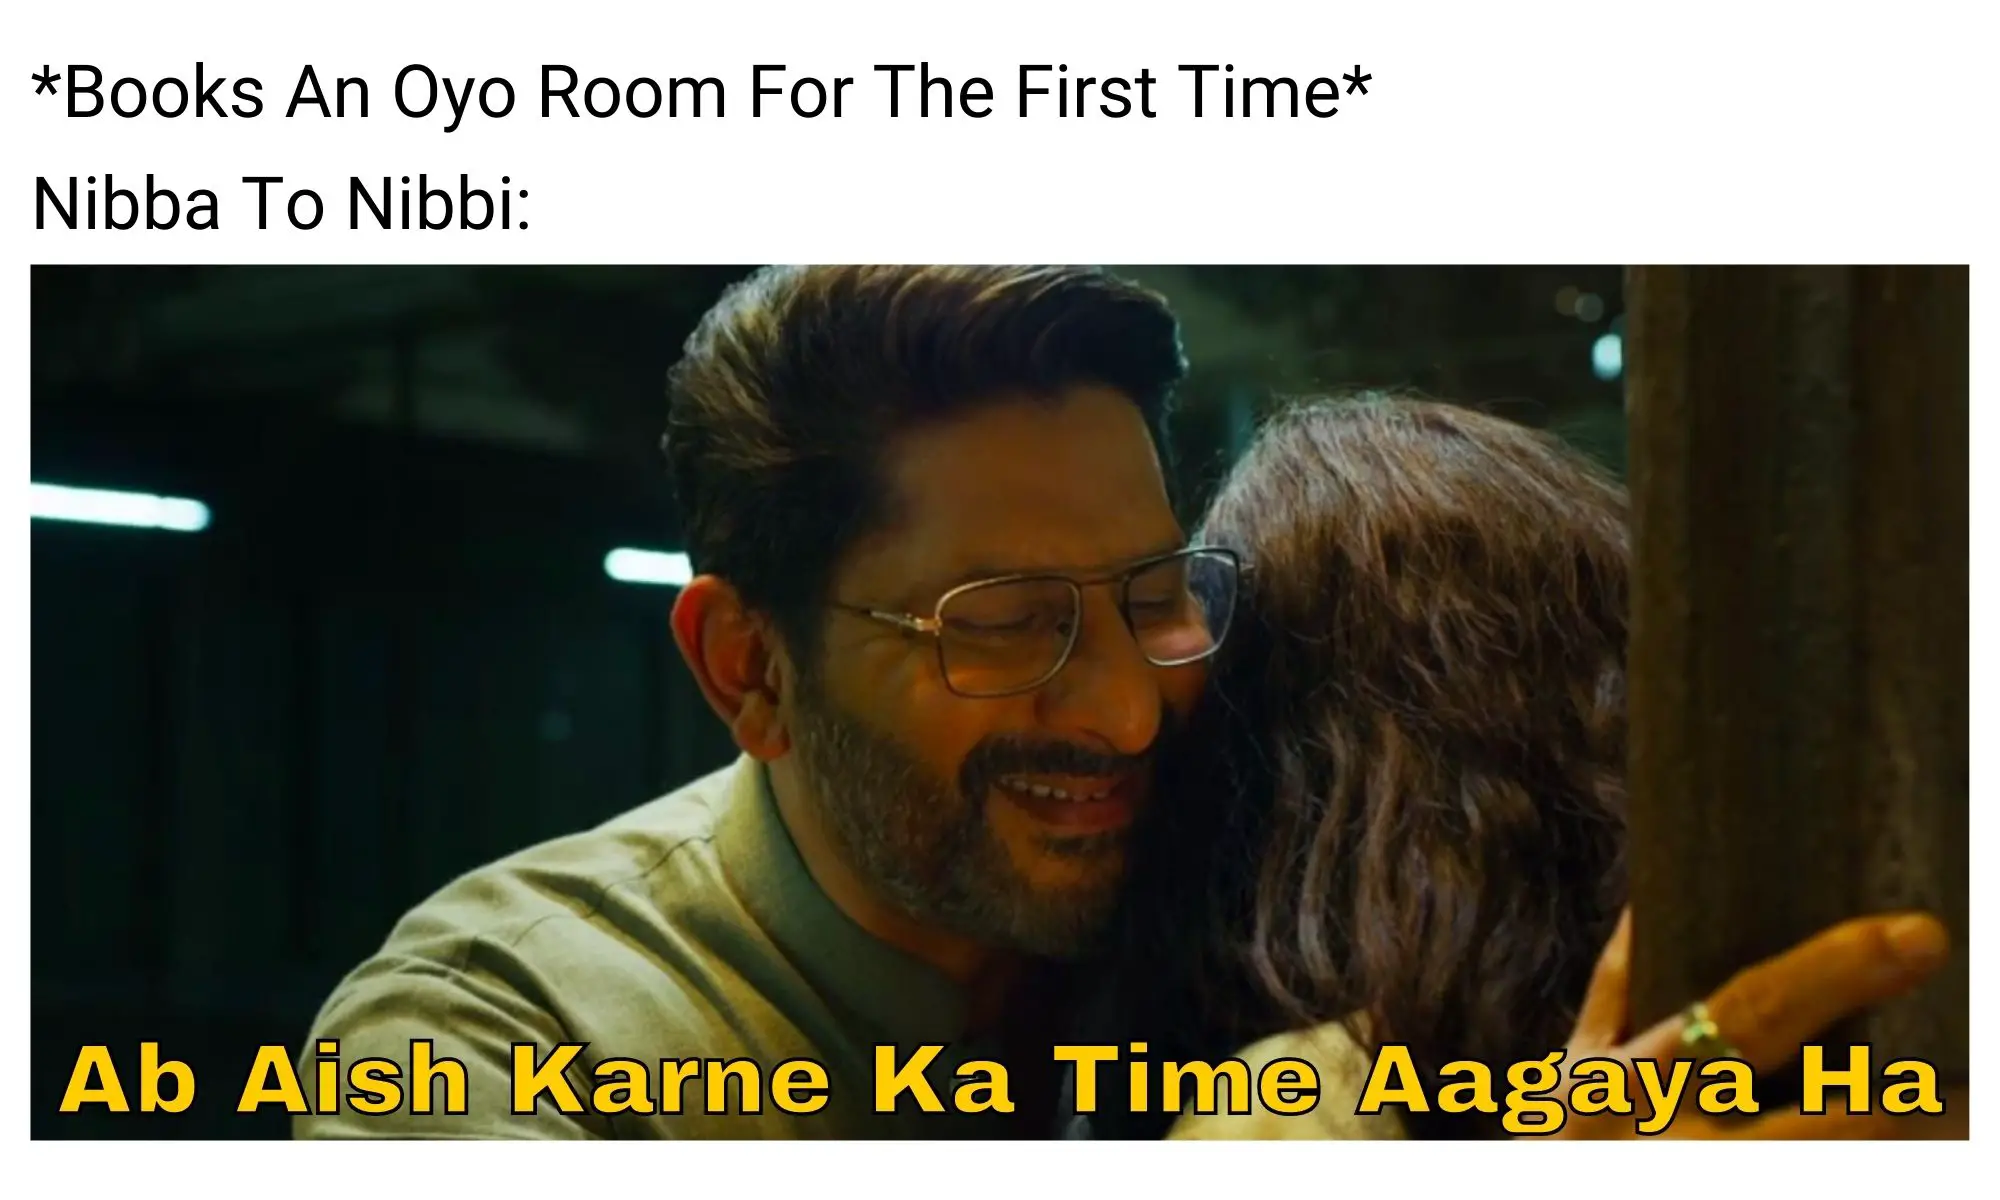 Durgamati meme on Nibba and Nibbi